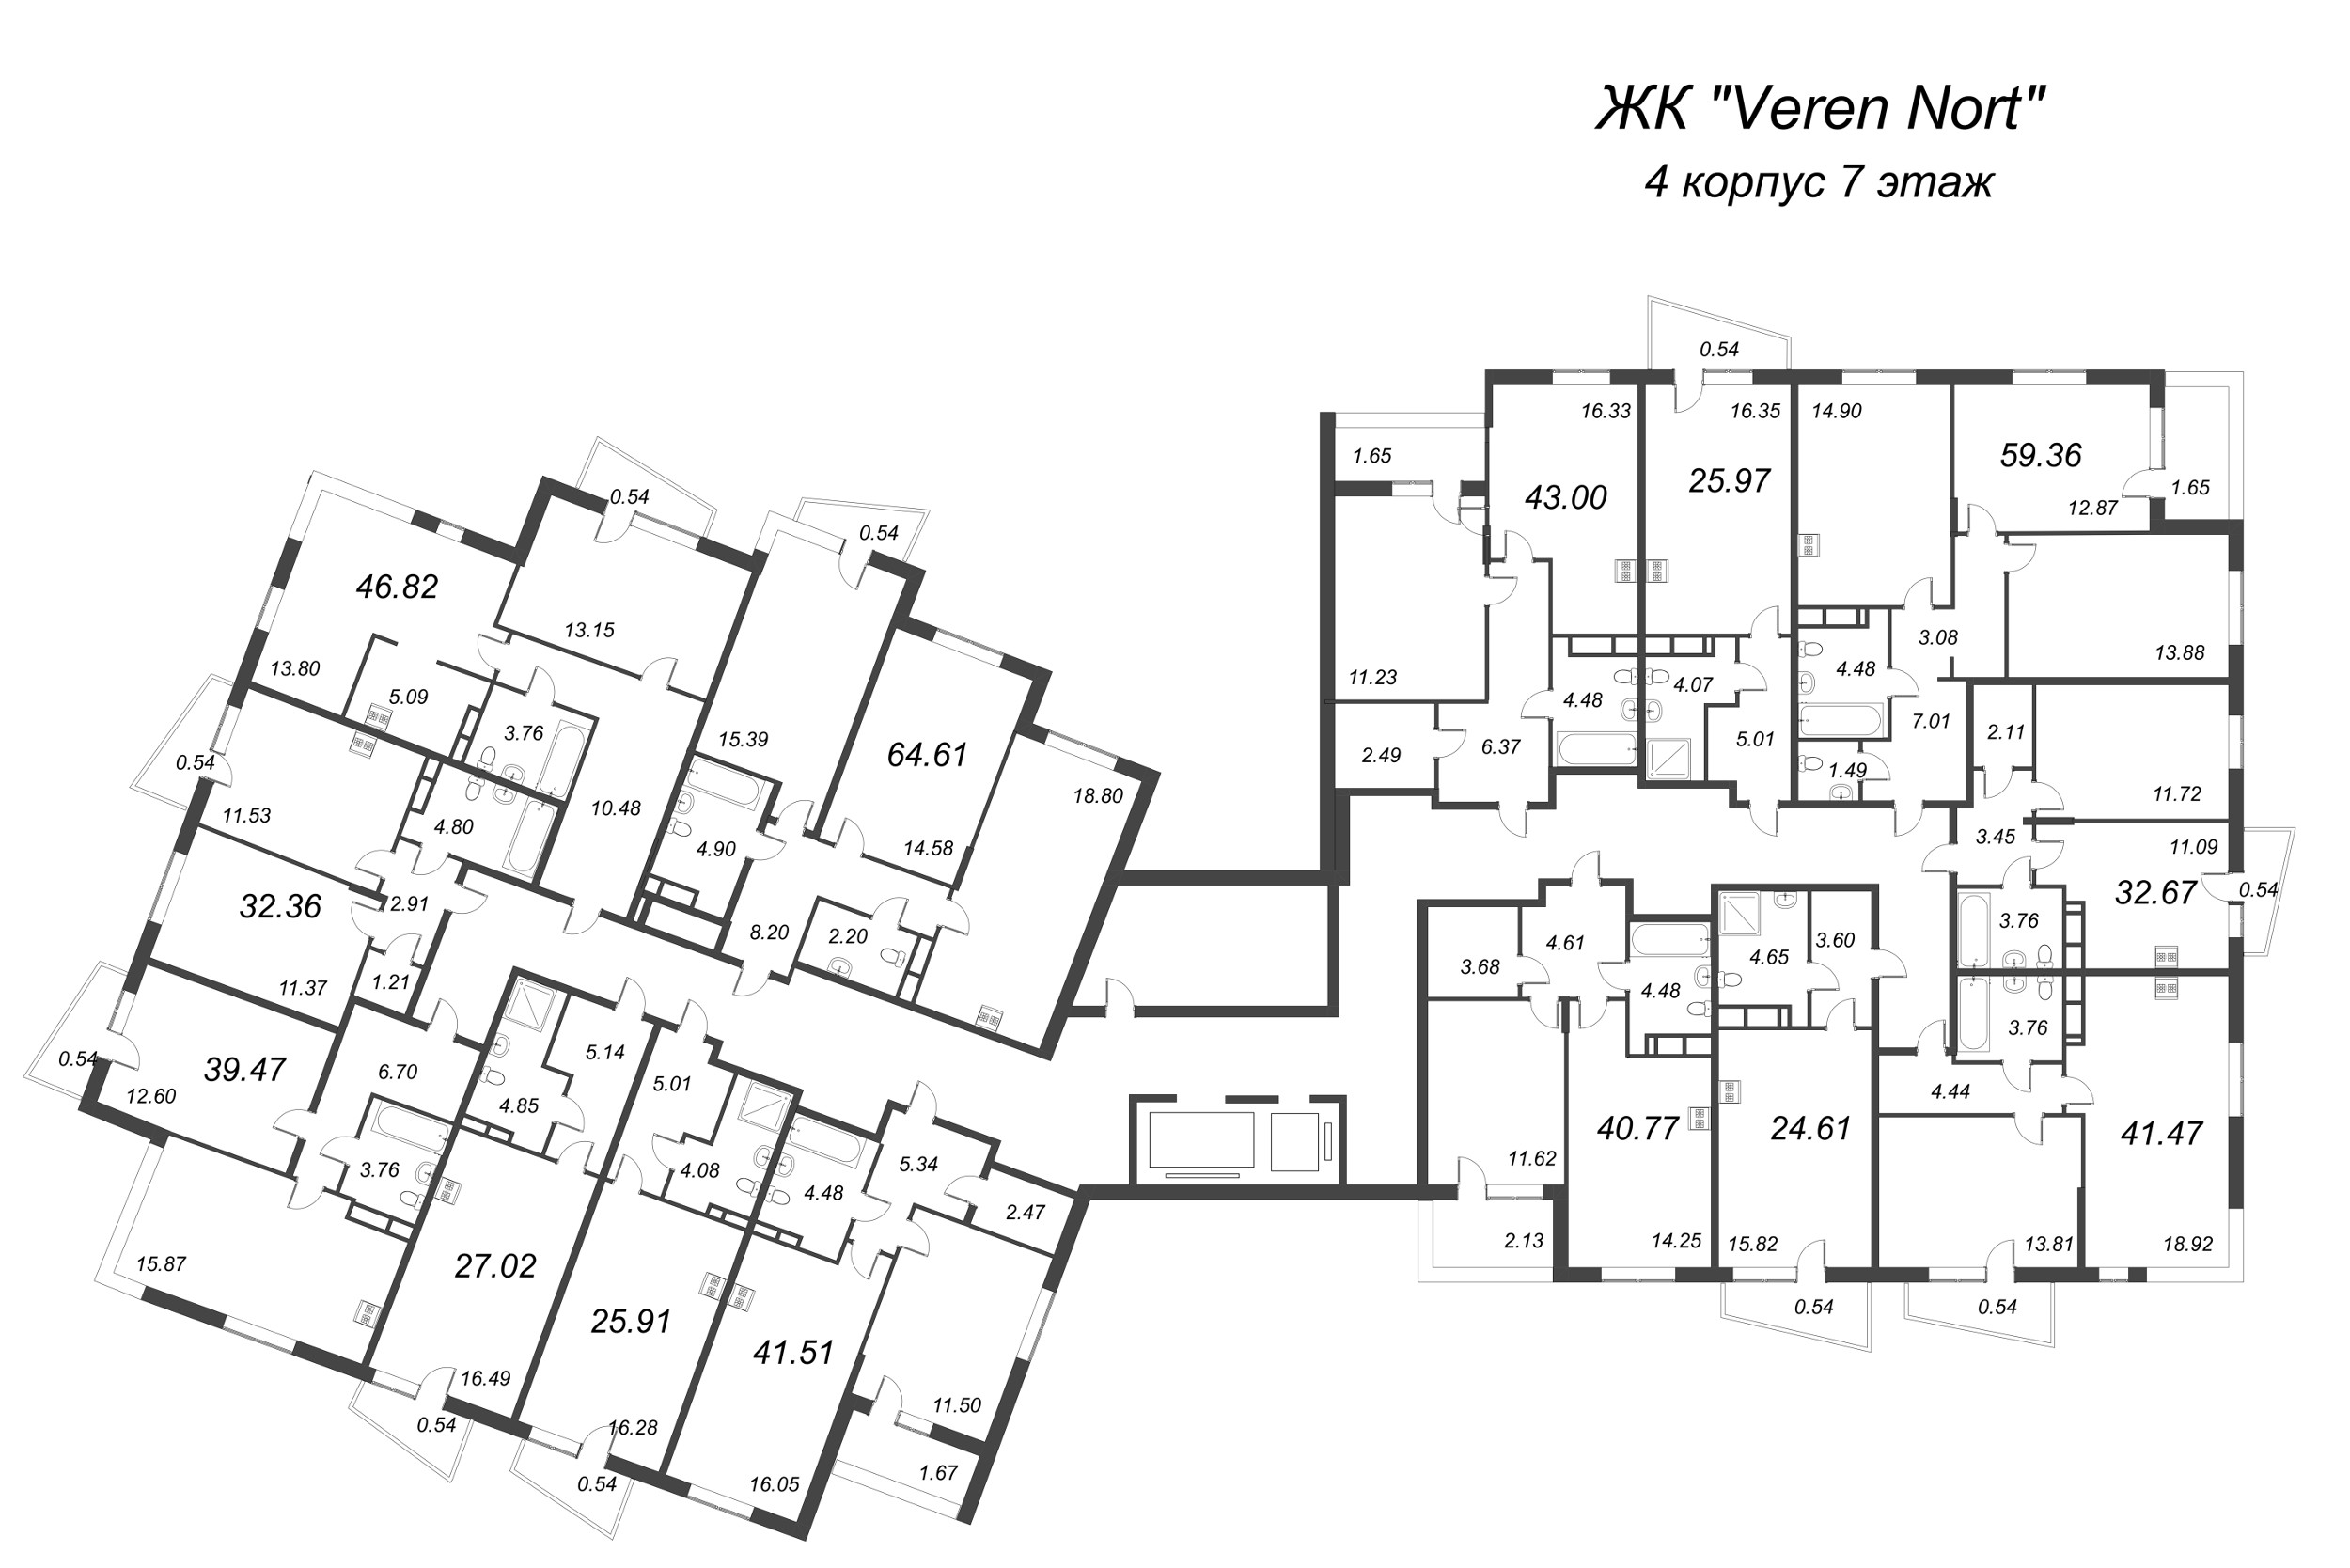 3-комнатная (Евро) квартира, 59.36 м² - планировка этажа